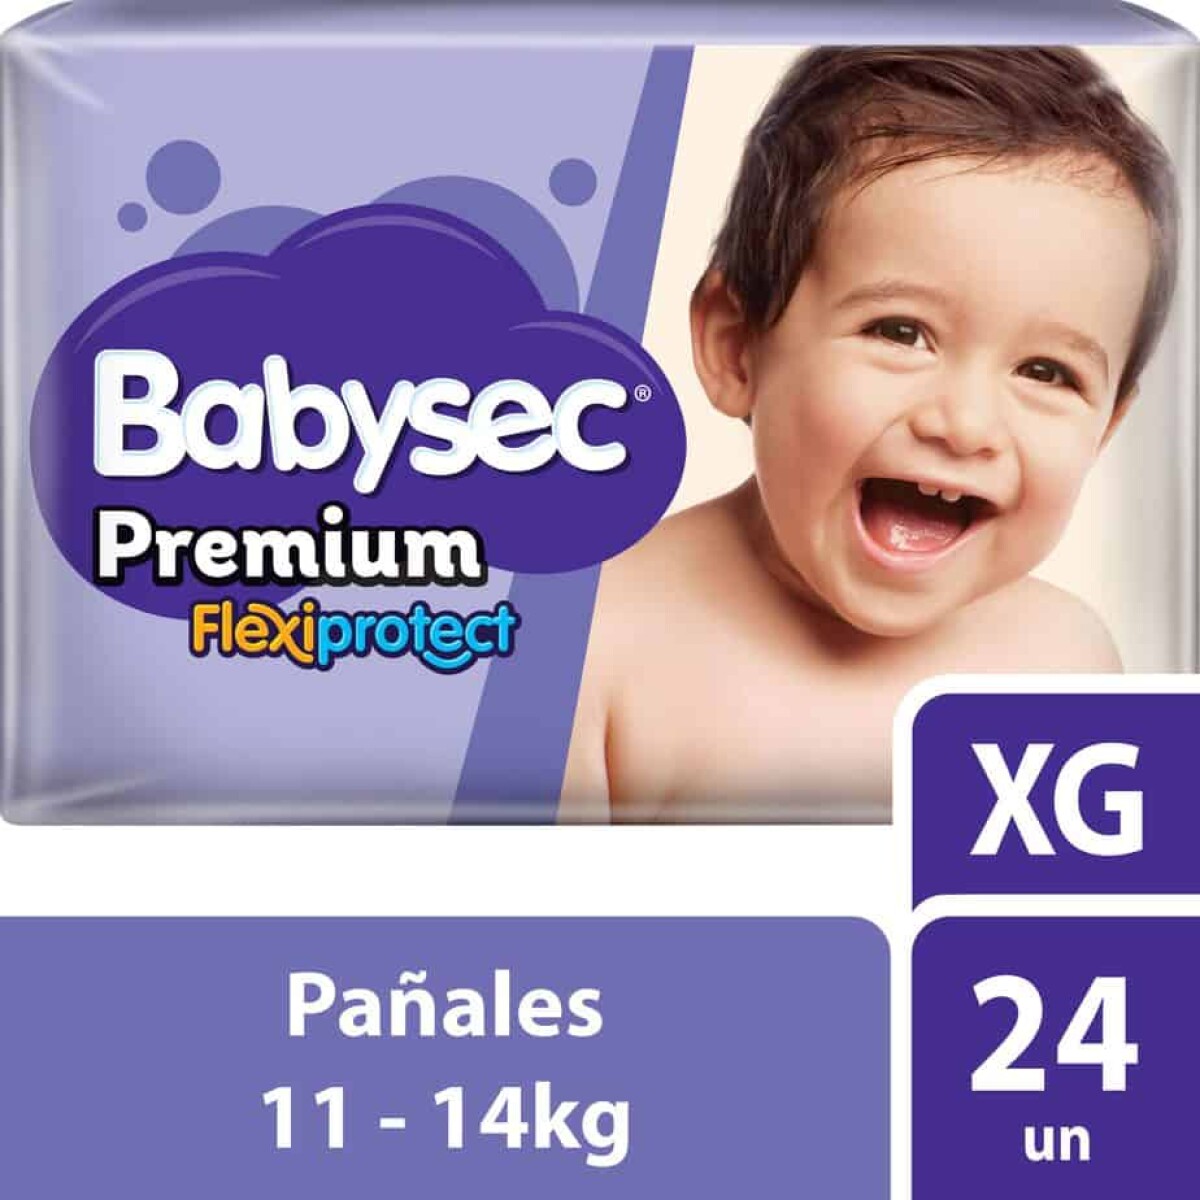 Pañales Babysec Premium Xg X 24 